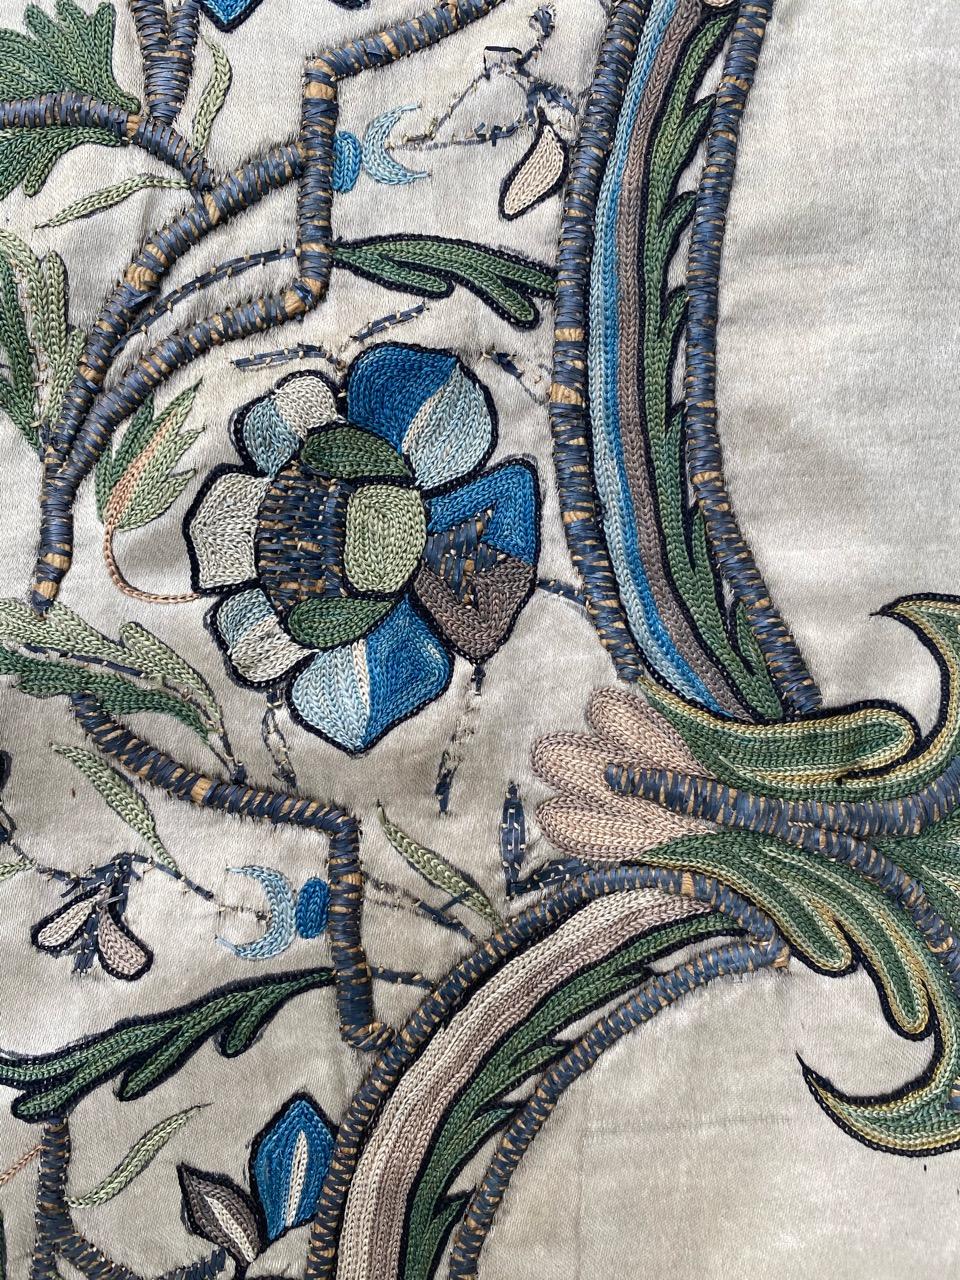 Bobyrug’s Wonderful Antique Turkish Ottoman Embroidery 8